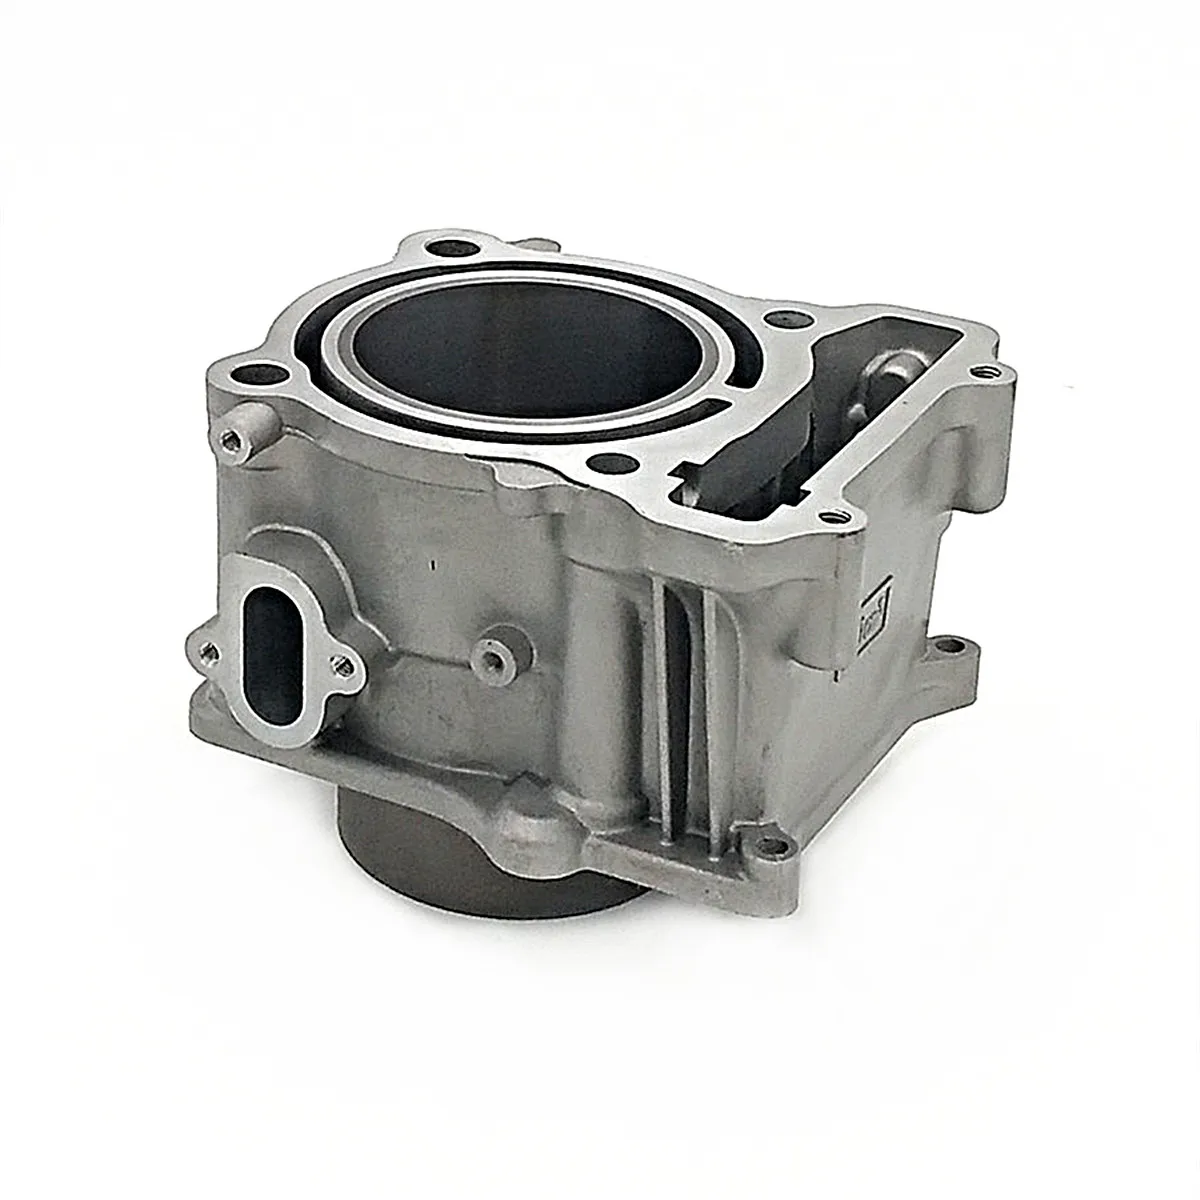 

HiSun ATV UTV 500cc Massimo Coleman BENNCHE High Performance Engine parts Cylinder Body Assy